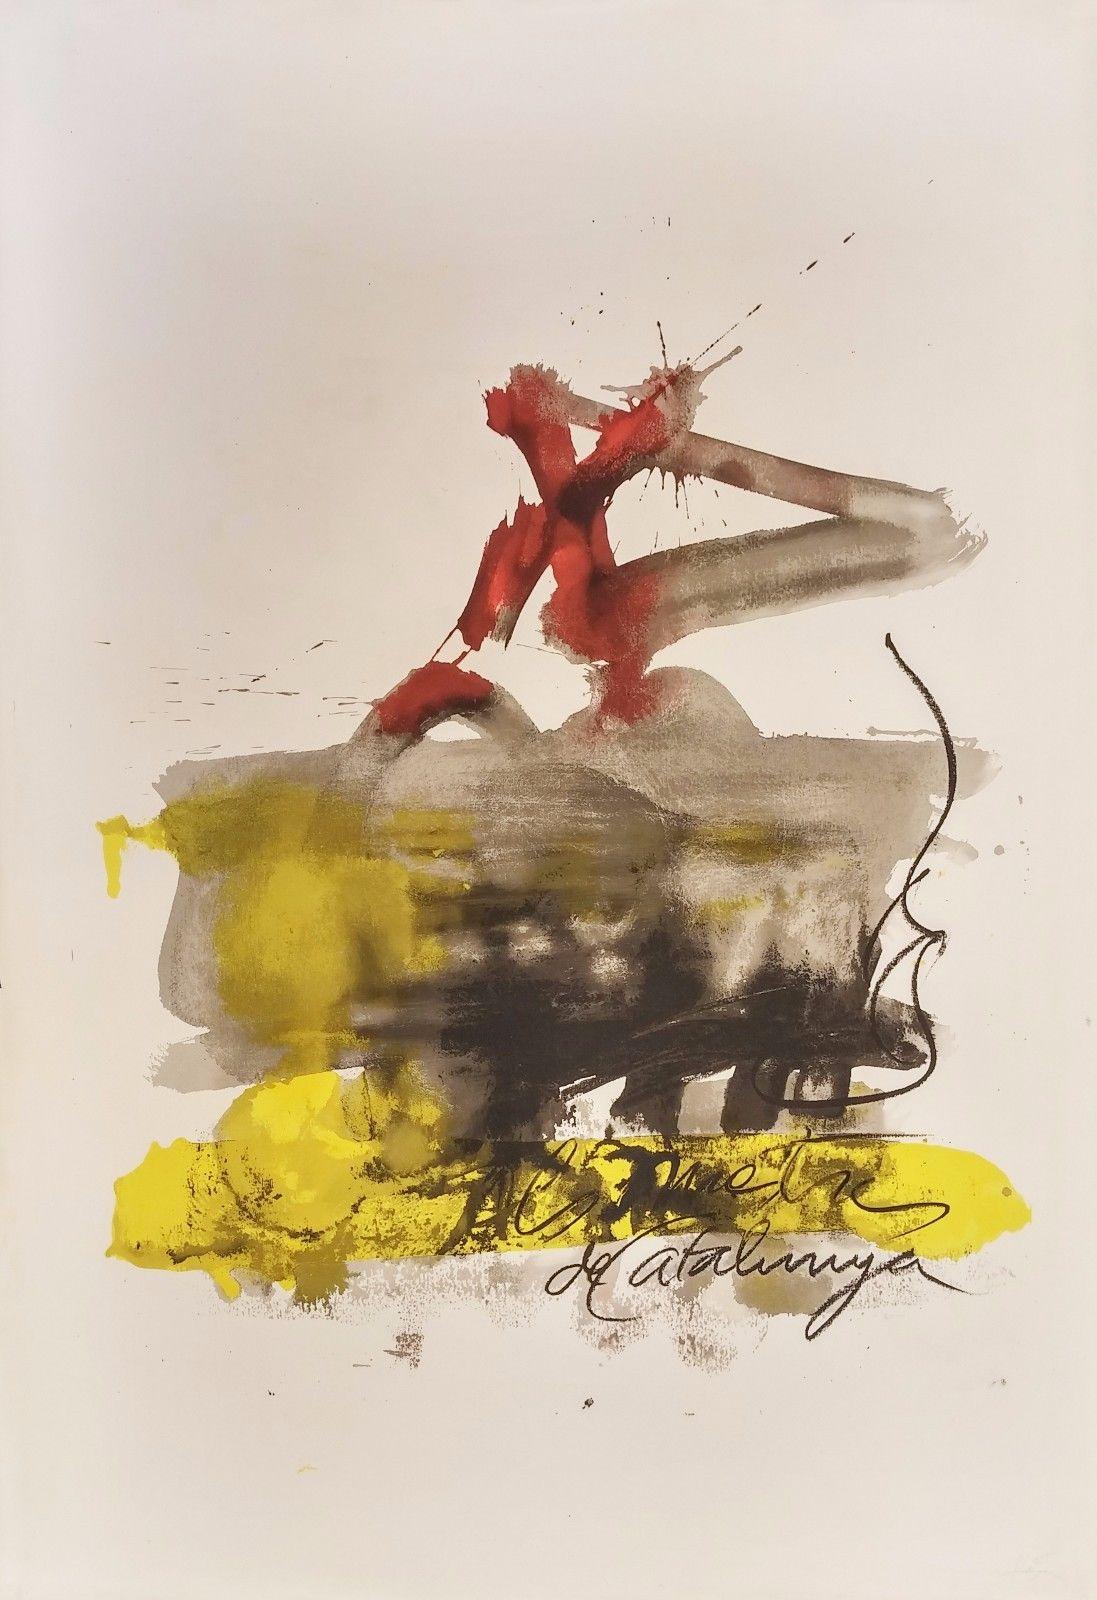 Antoni Tàpies Abstract Print - UNTITLED